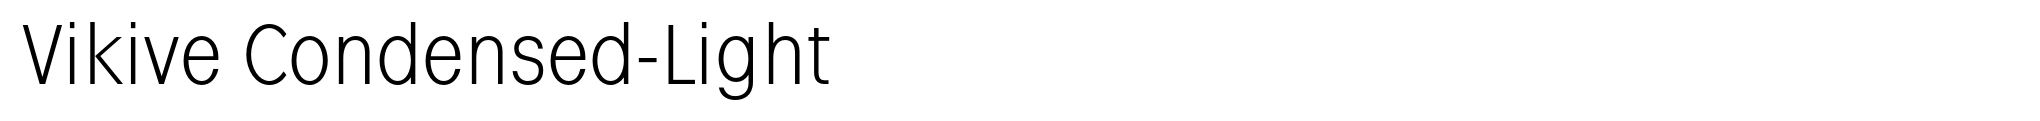 Vikive Condensed-Light image